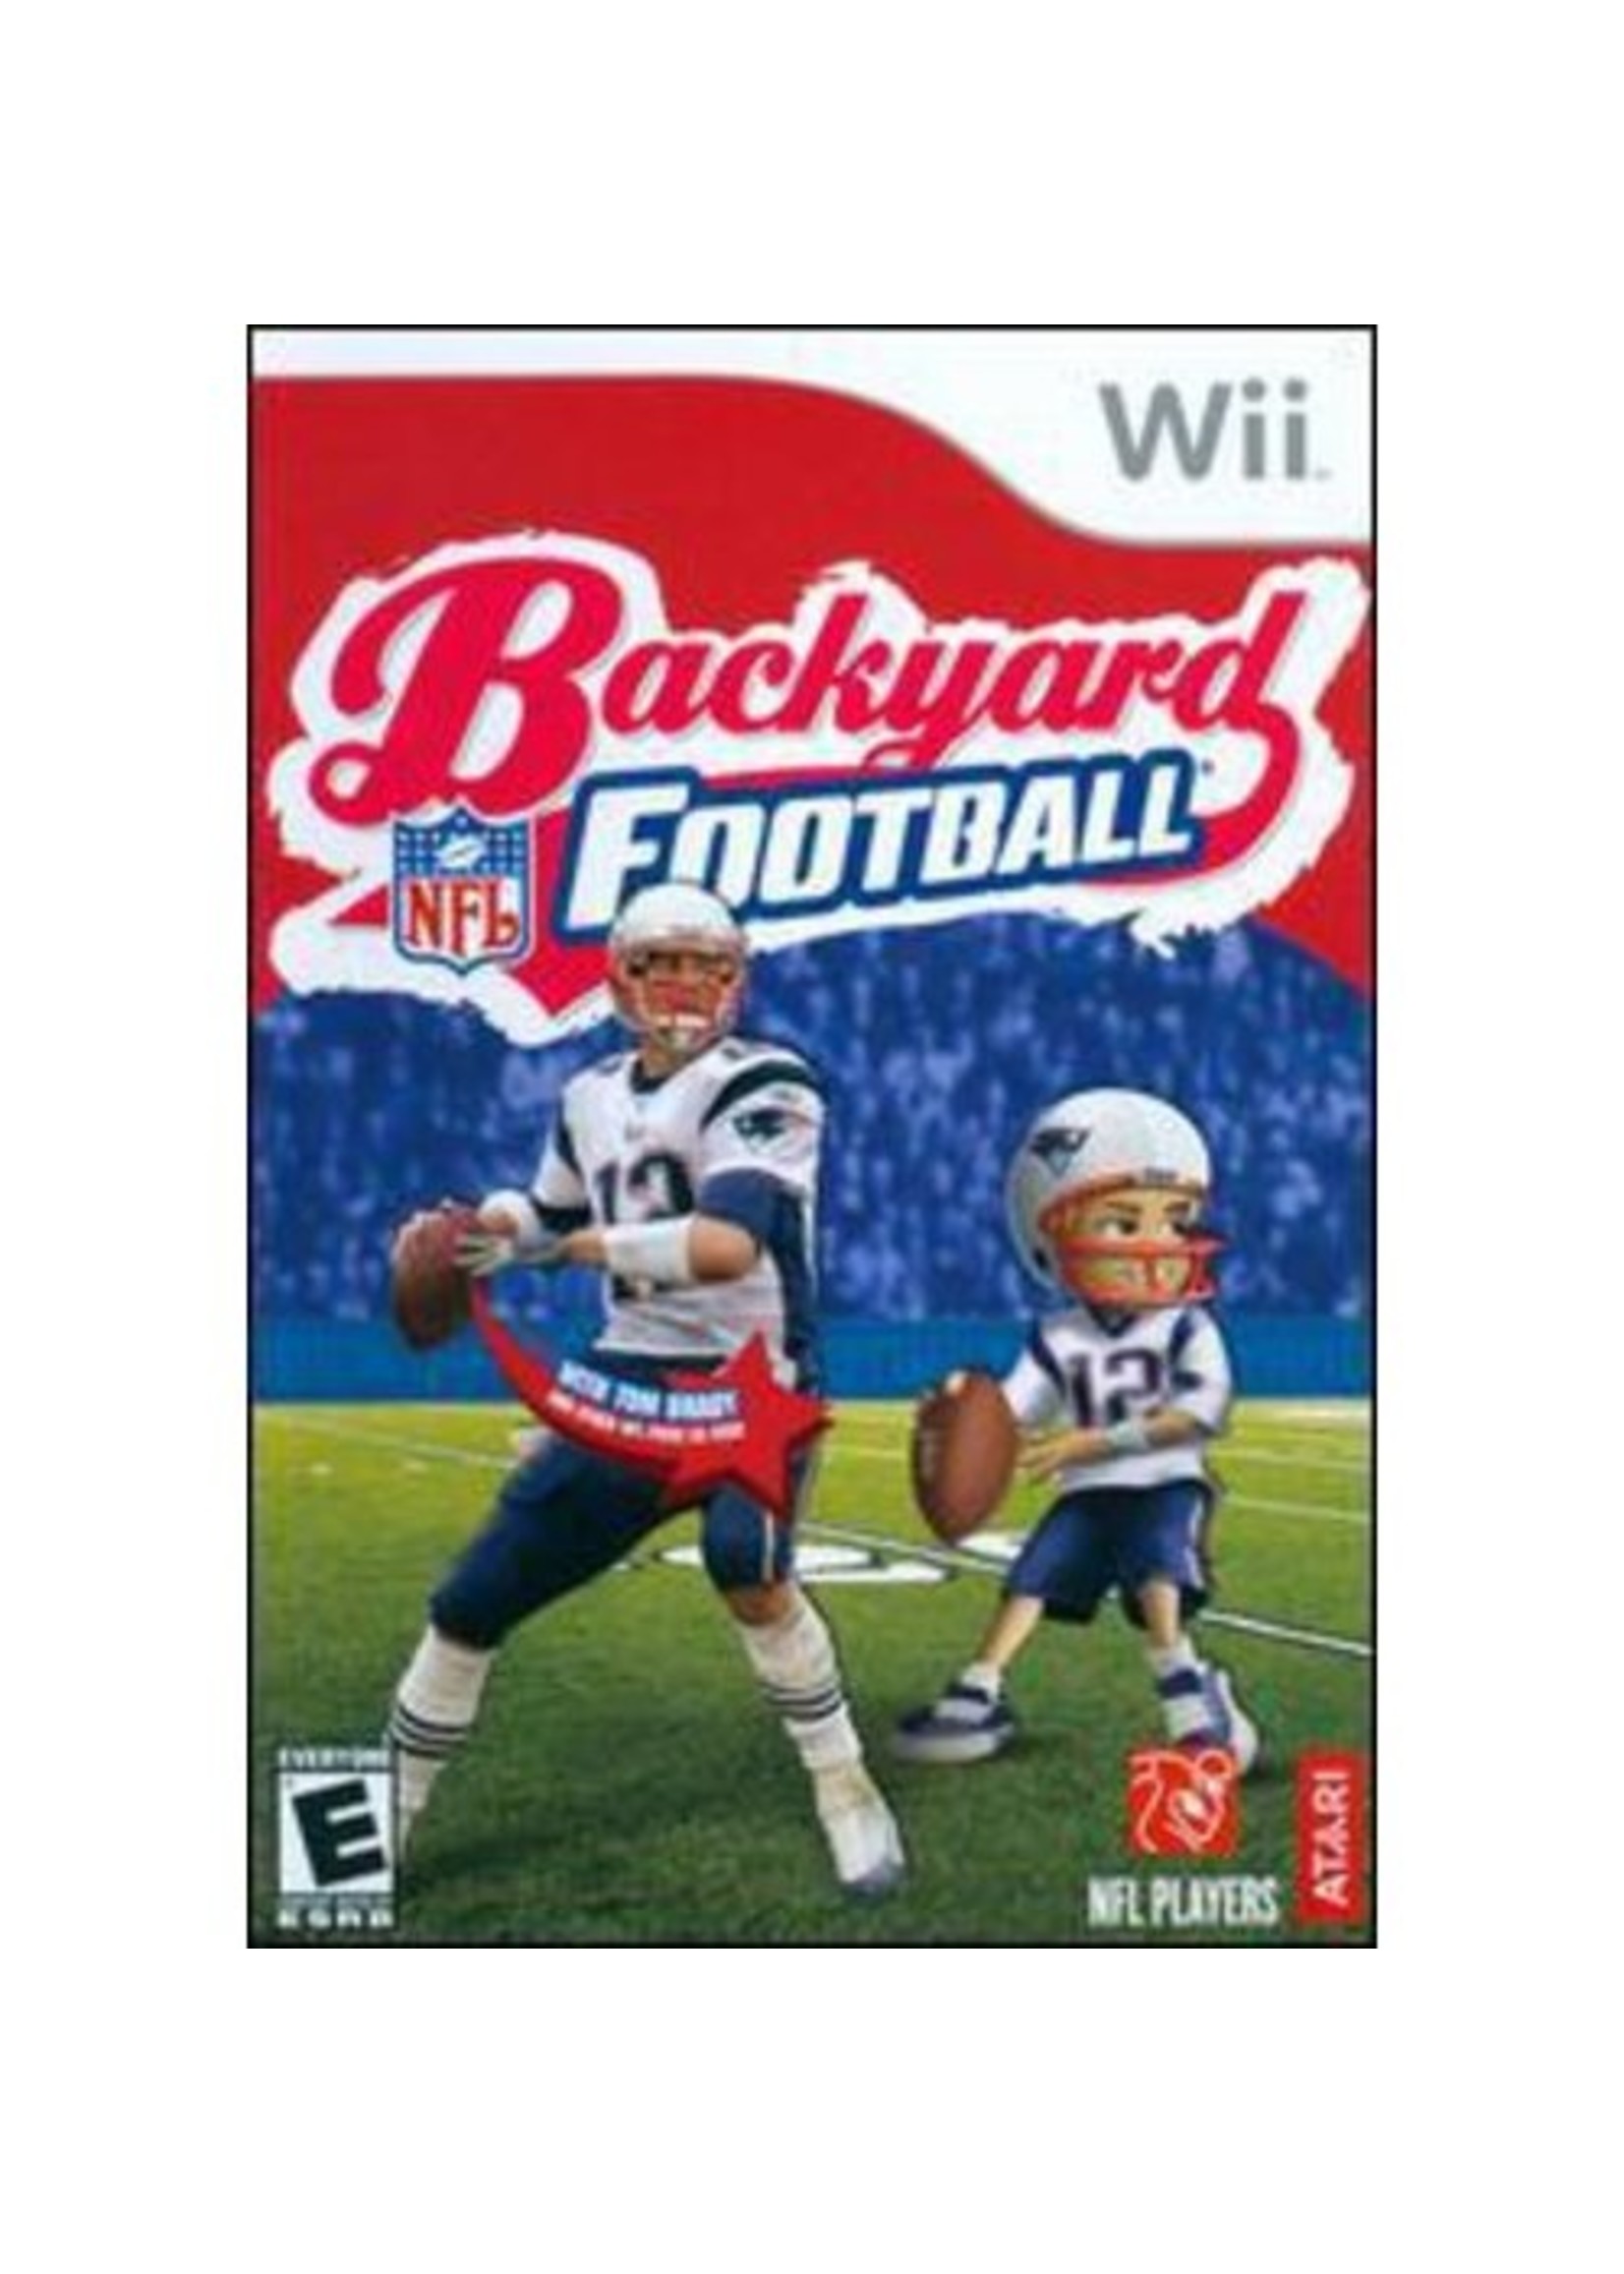 Nintendo Wii Backyard Football